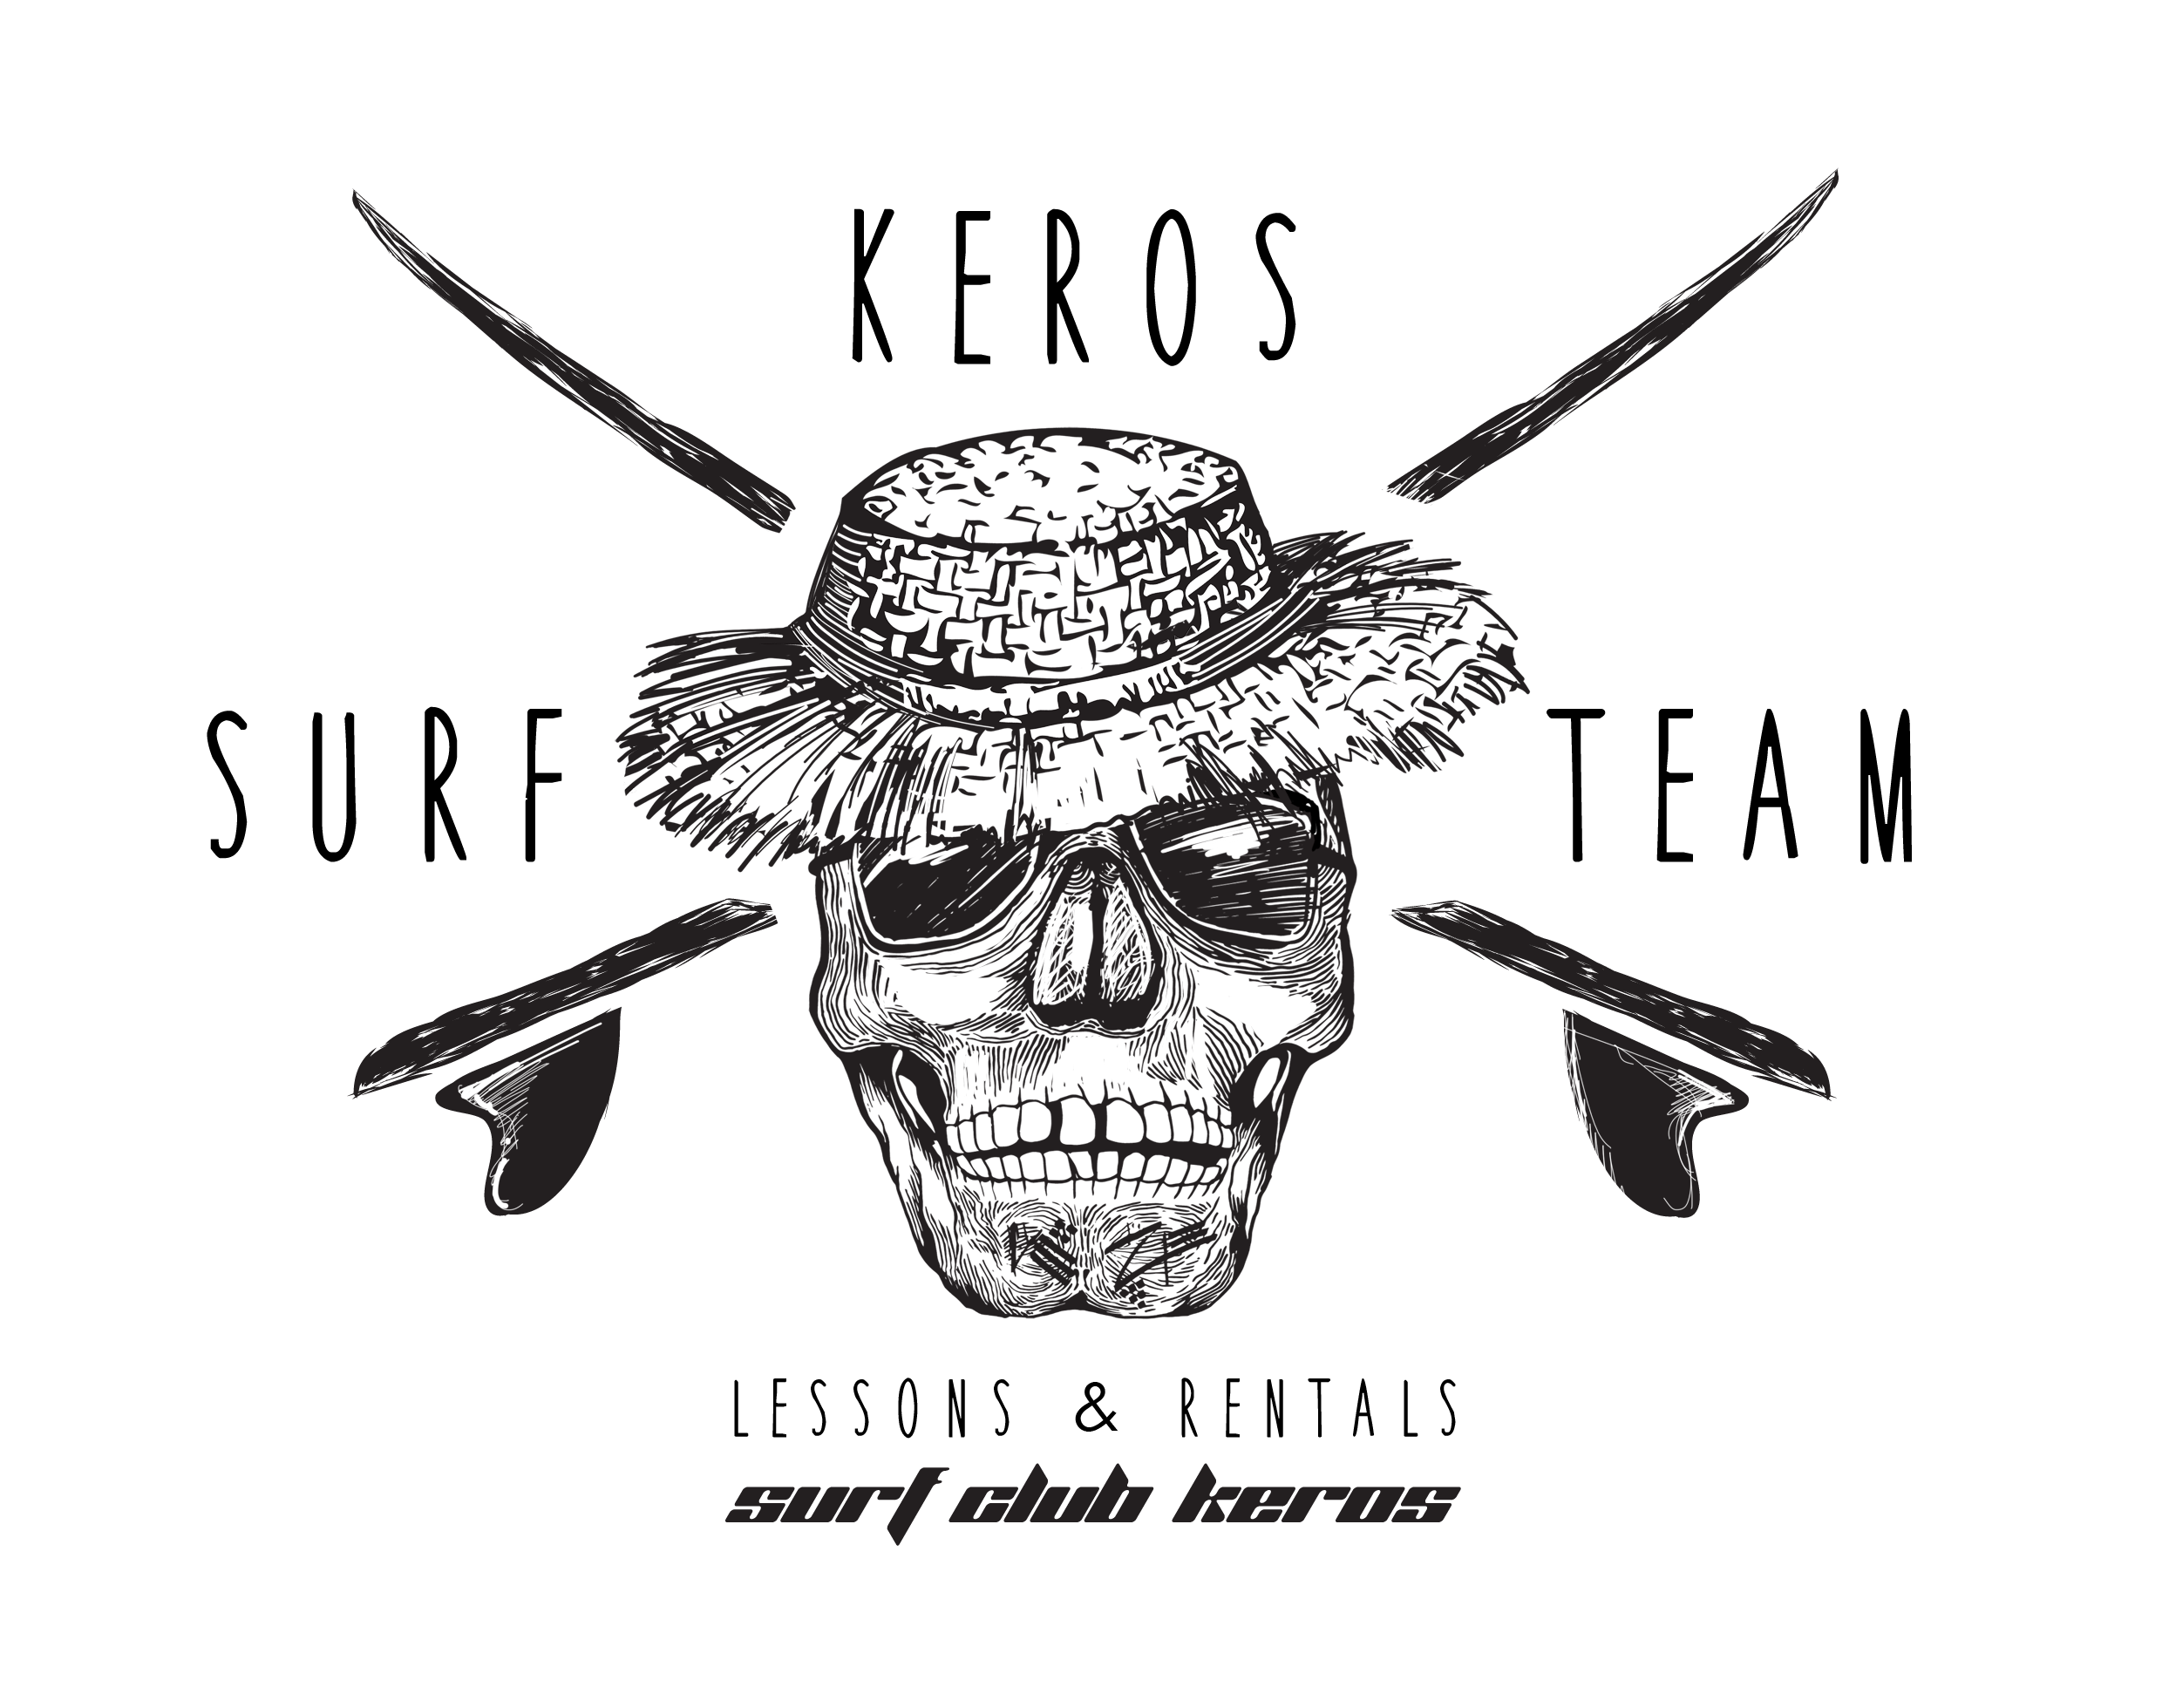 Surf Team Logo - surfing — Surf Club Keros